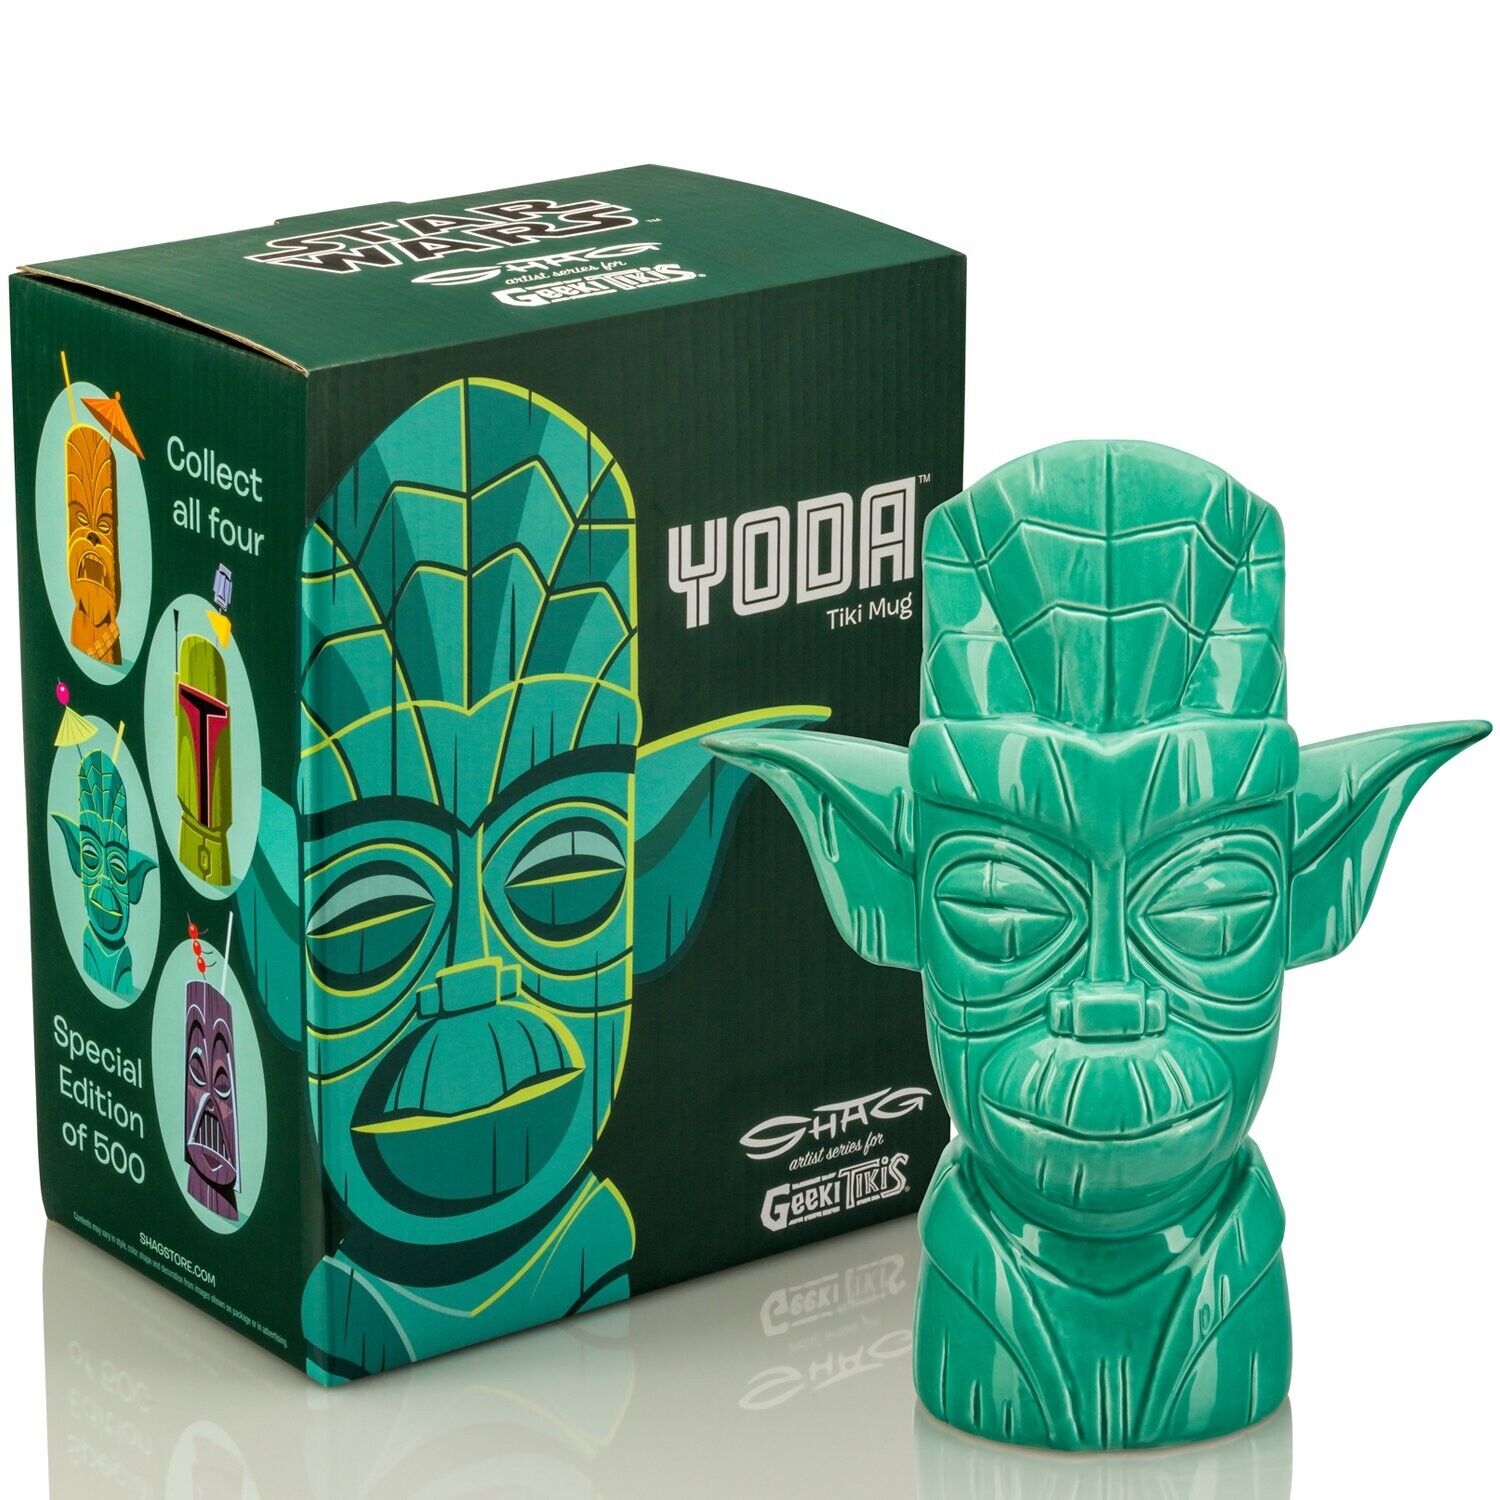 SHAG x Geeki Tiki Star Wars Yoda Mug SDCC Exclusive of 500 - SOLD OUT